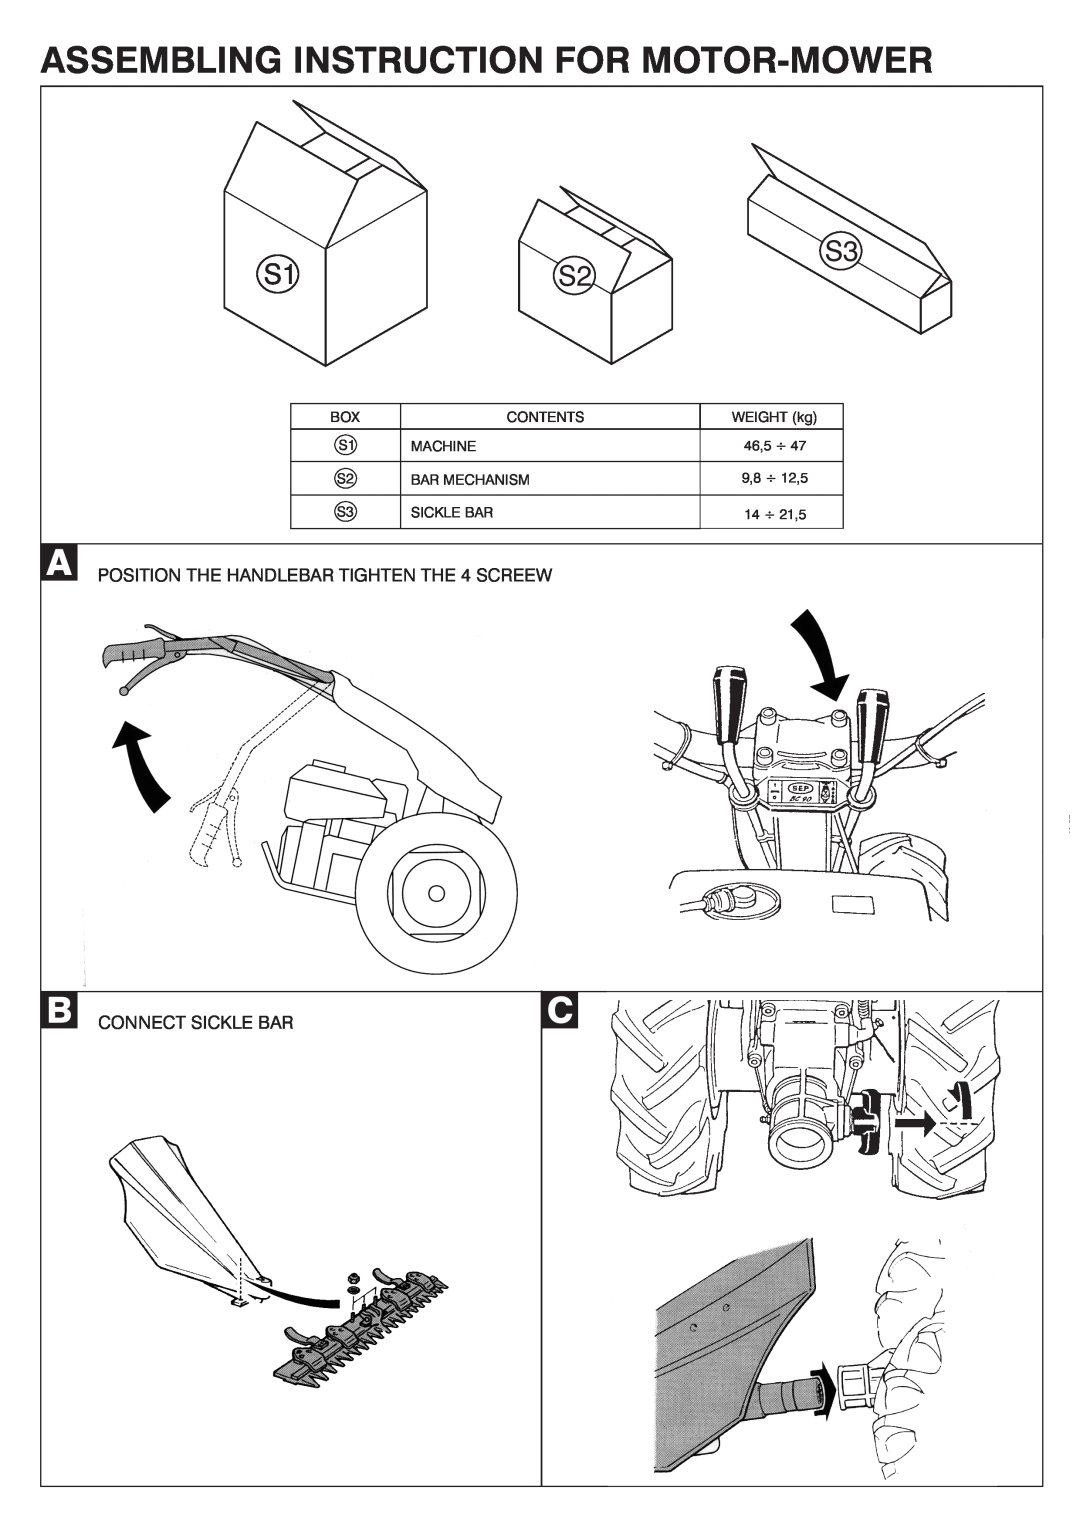 S.E.P BC90(1+1) Assembling Instruction For Motor-Mower, S3 S2, Contents, WEIGHT kg, Machine, Bar Mechanism, Sickle Bar 